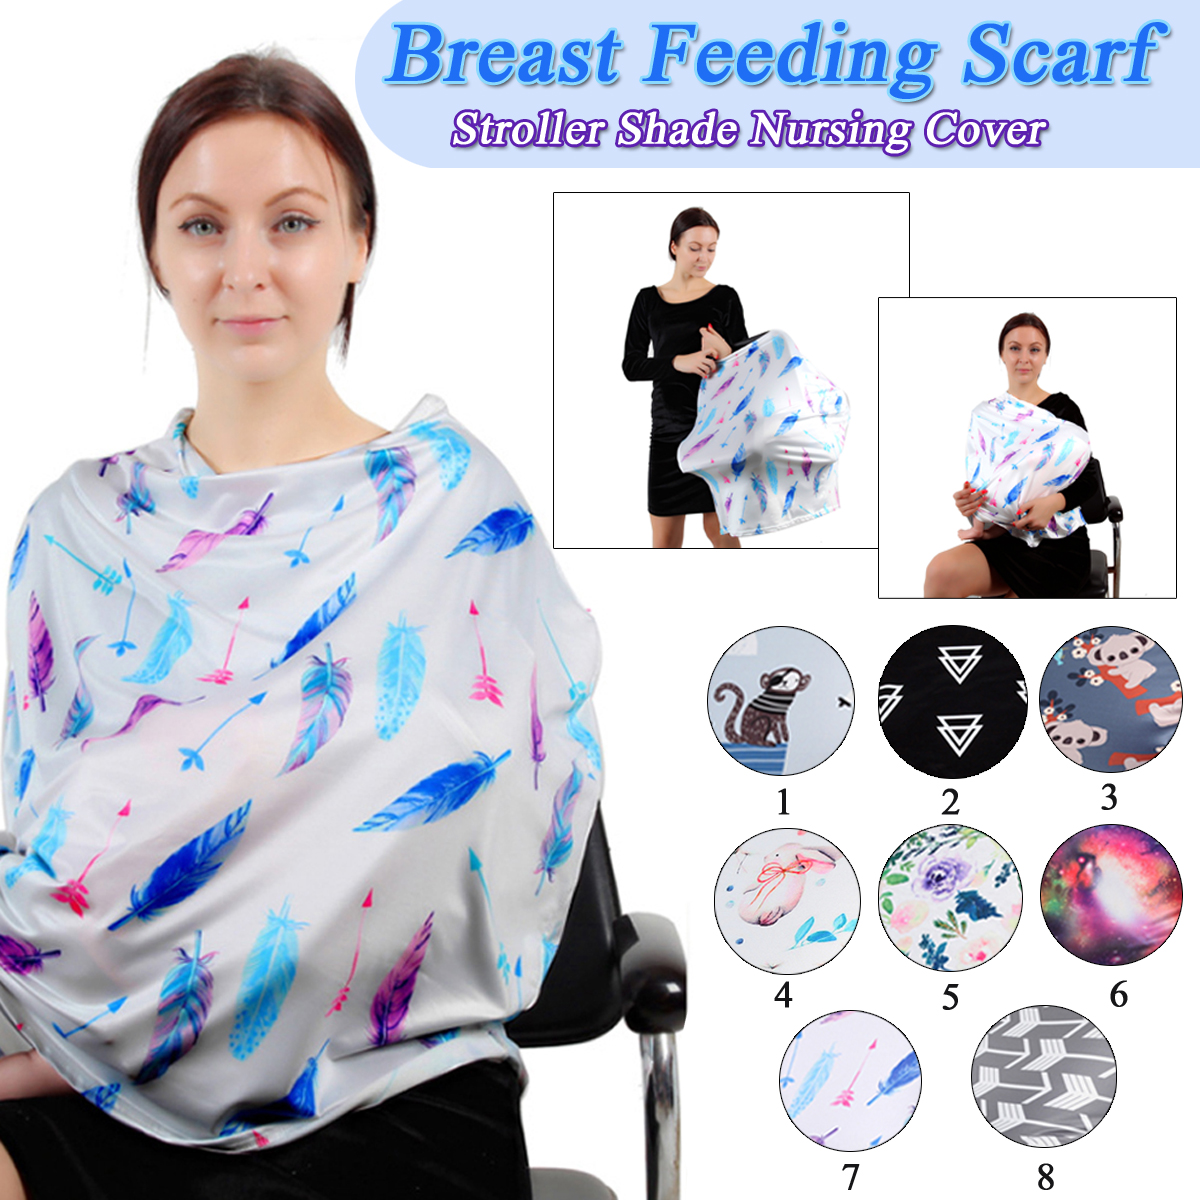 Multifunctional-Breathable-Nursing-Breast-Feeding-Scarf-Stroller-Shade-Cover-Long-Cotton-Shawl-Wraps-1698154-1